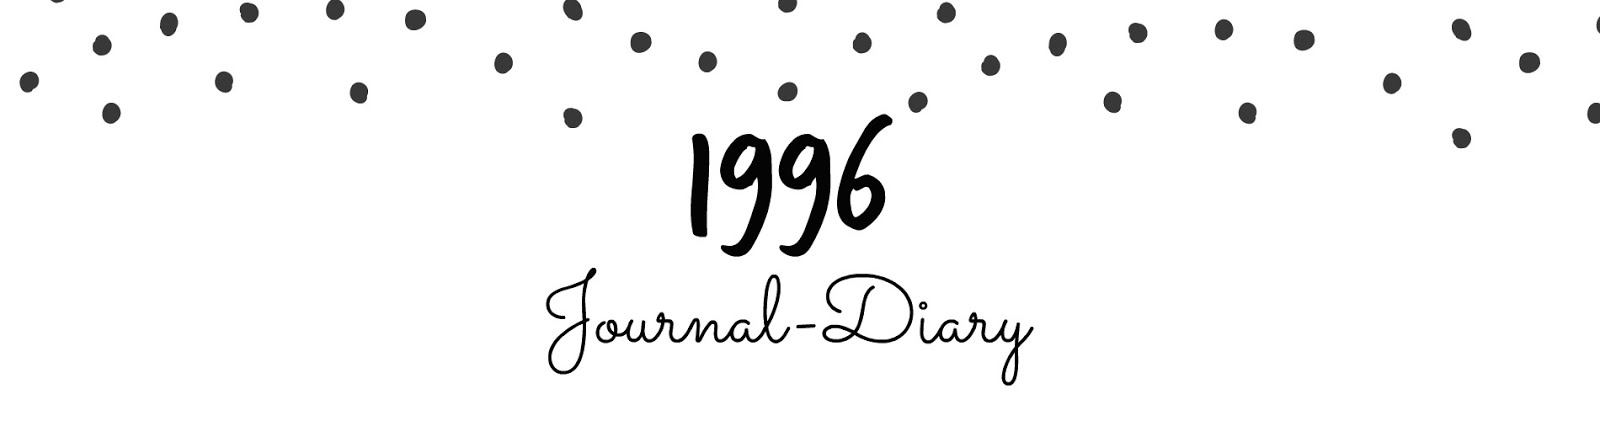 1996 journal-diary